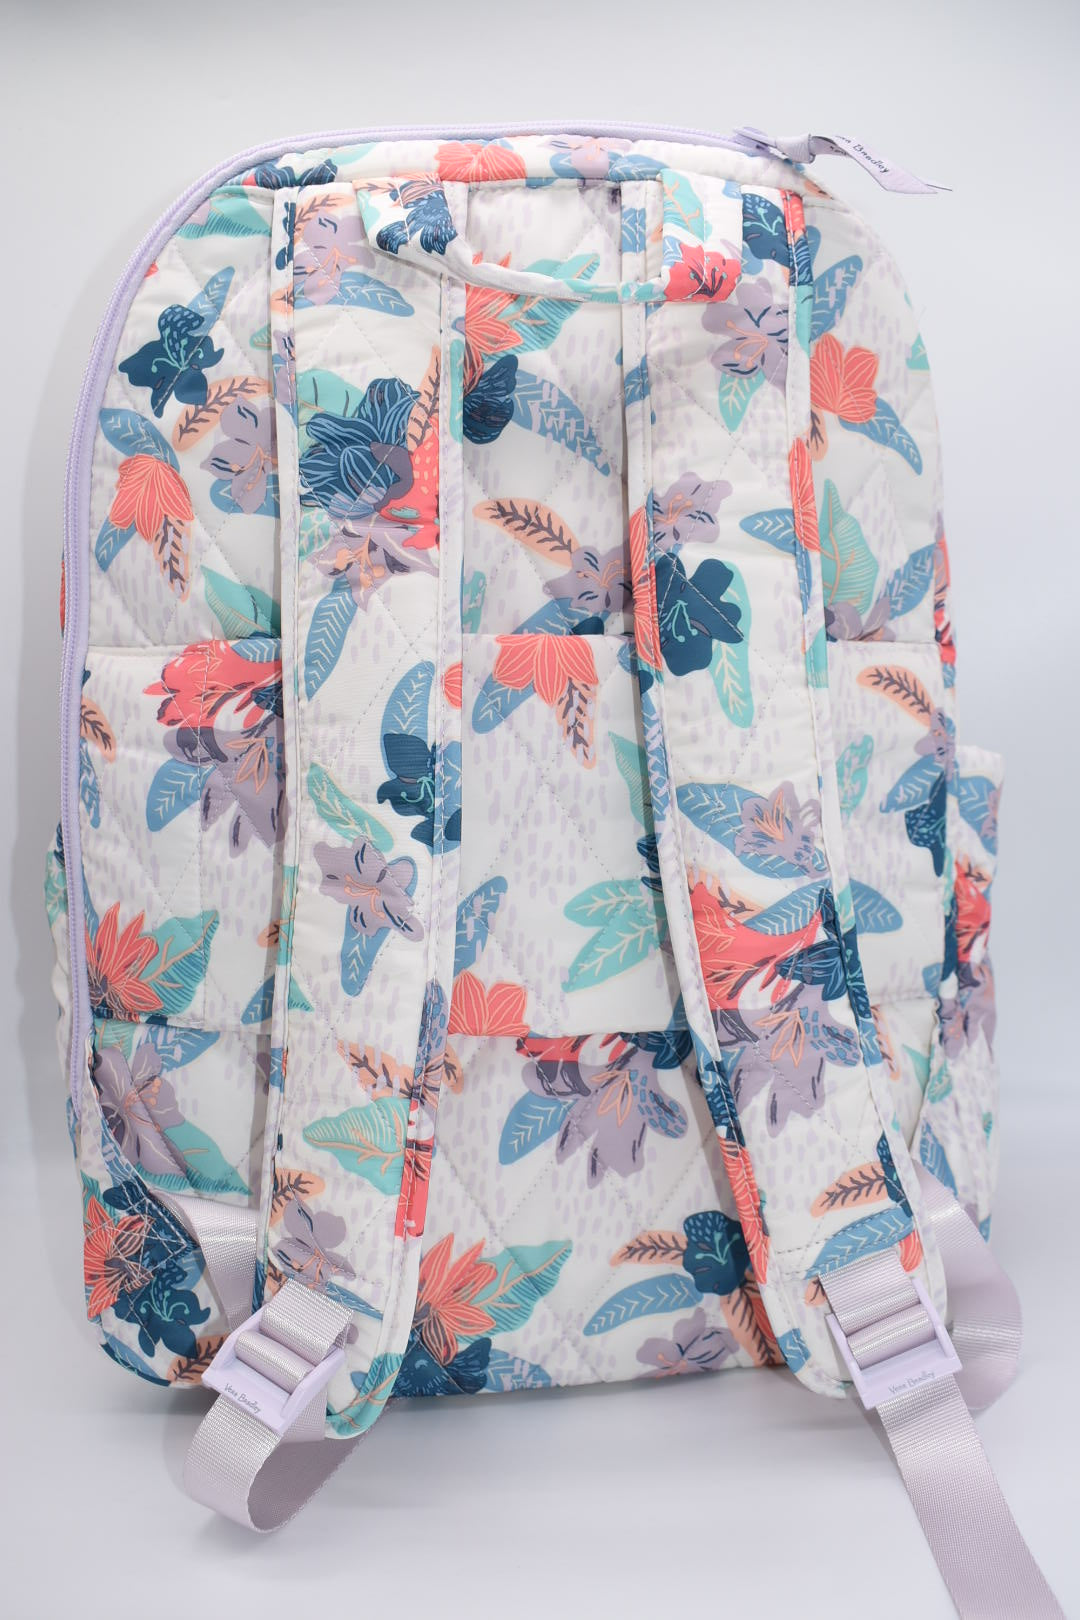 Vera Bradley Ultralight Large Backpack in "Tropical Floral" Pattern